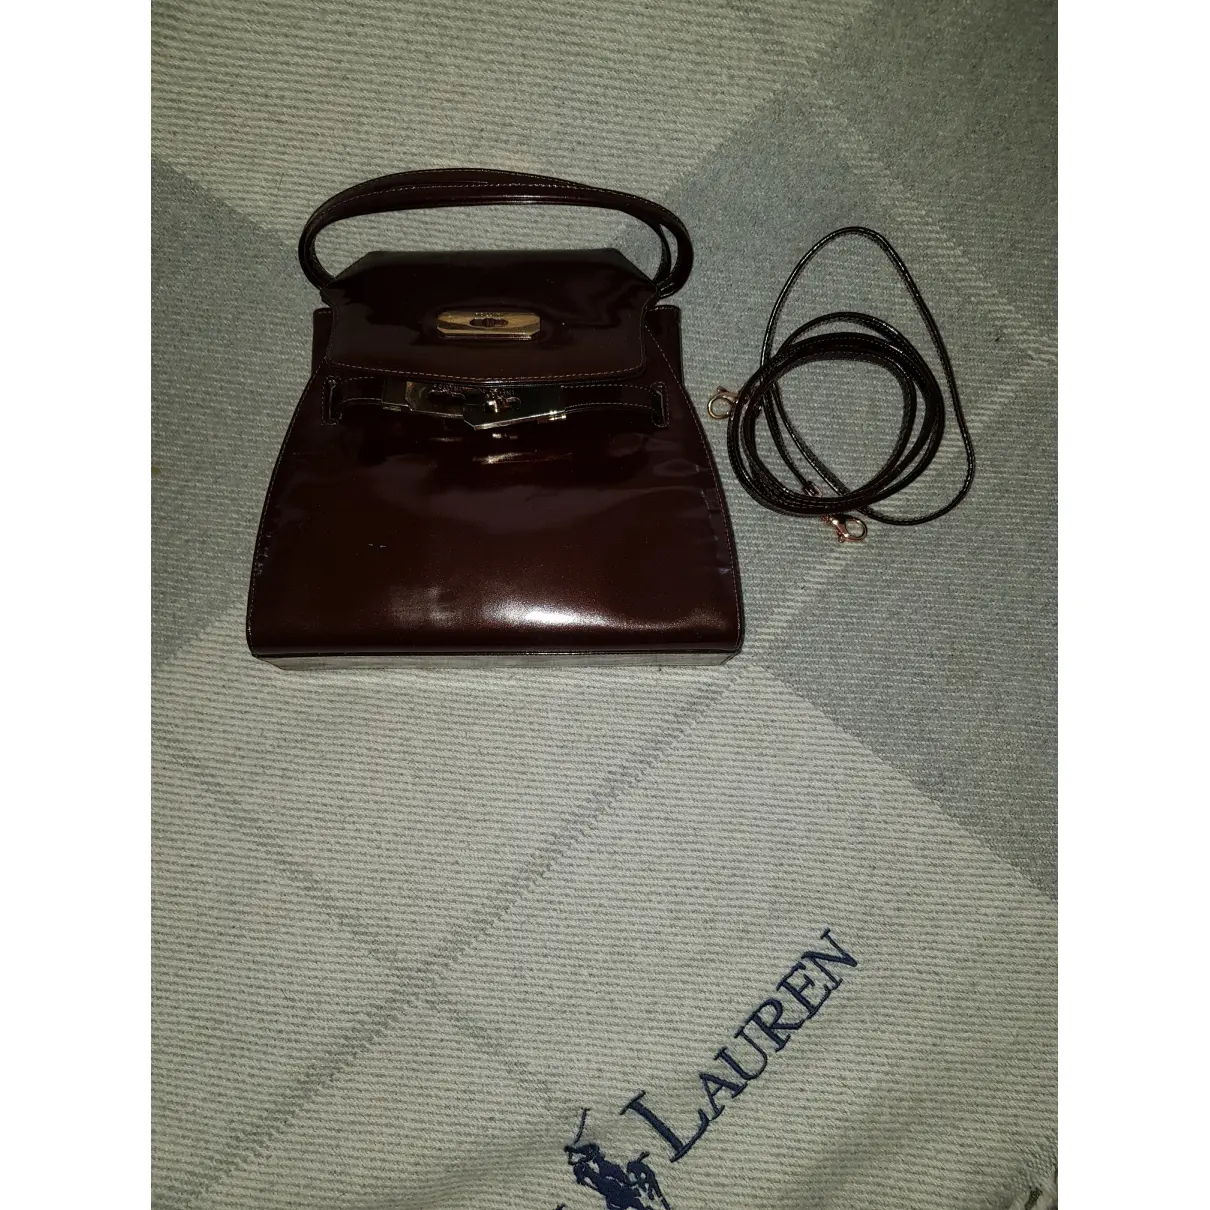 Patent leather handbag Pollini